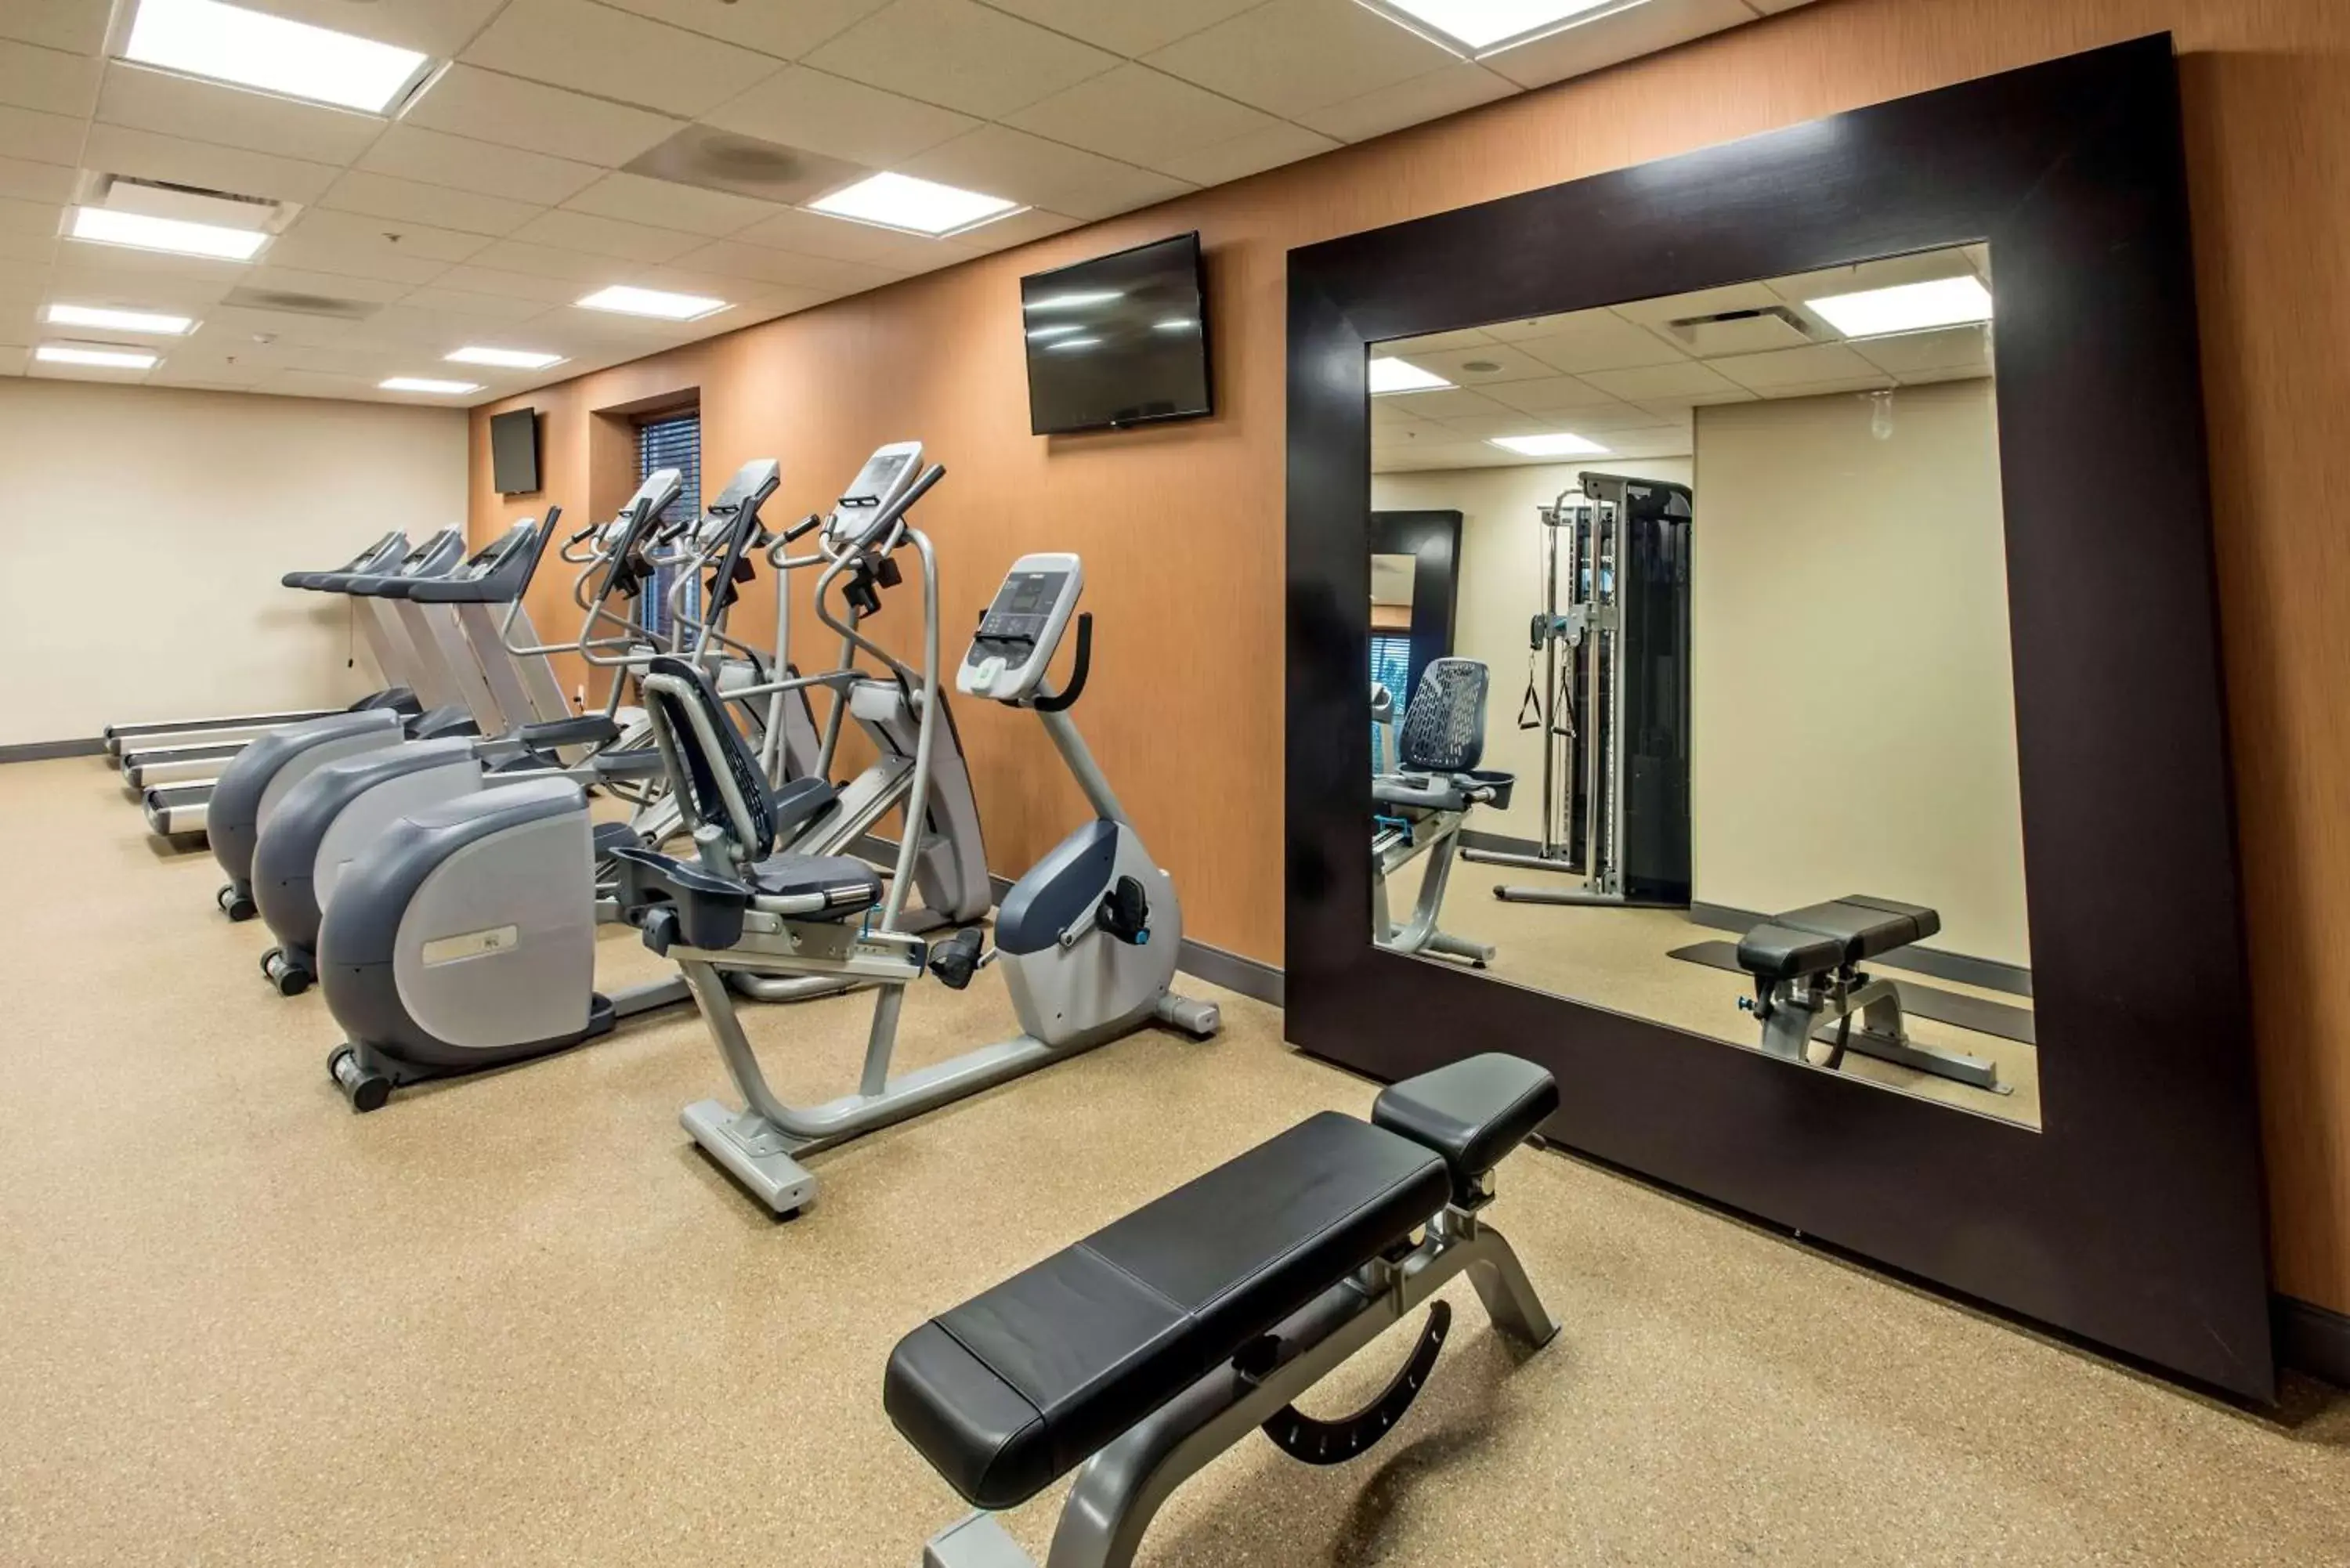 Fitness centre/facilities, Fitness Center/Facilities in Hilton Garden Inn Minneapolis Airport Mall of America